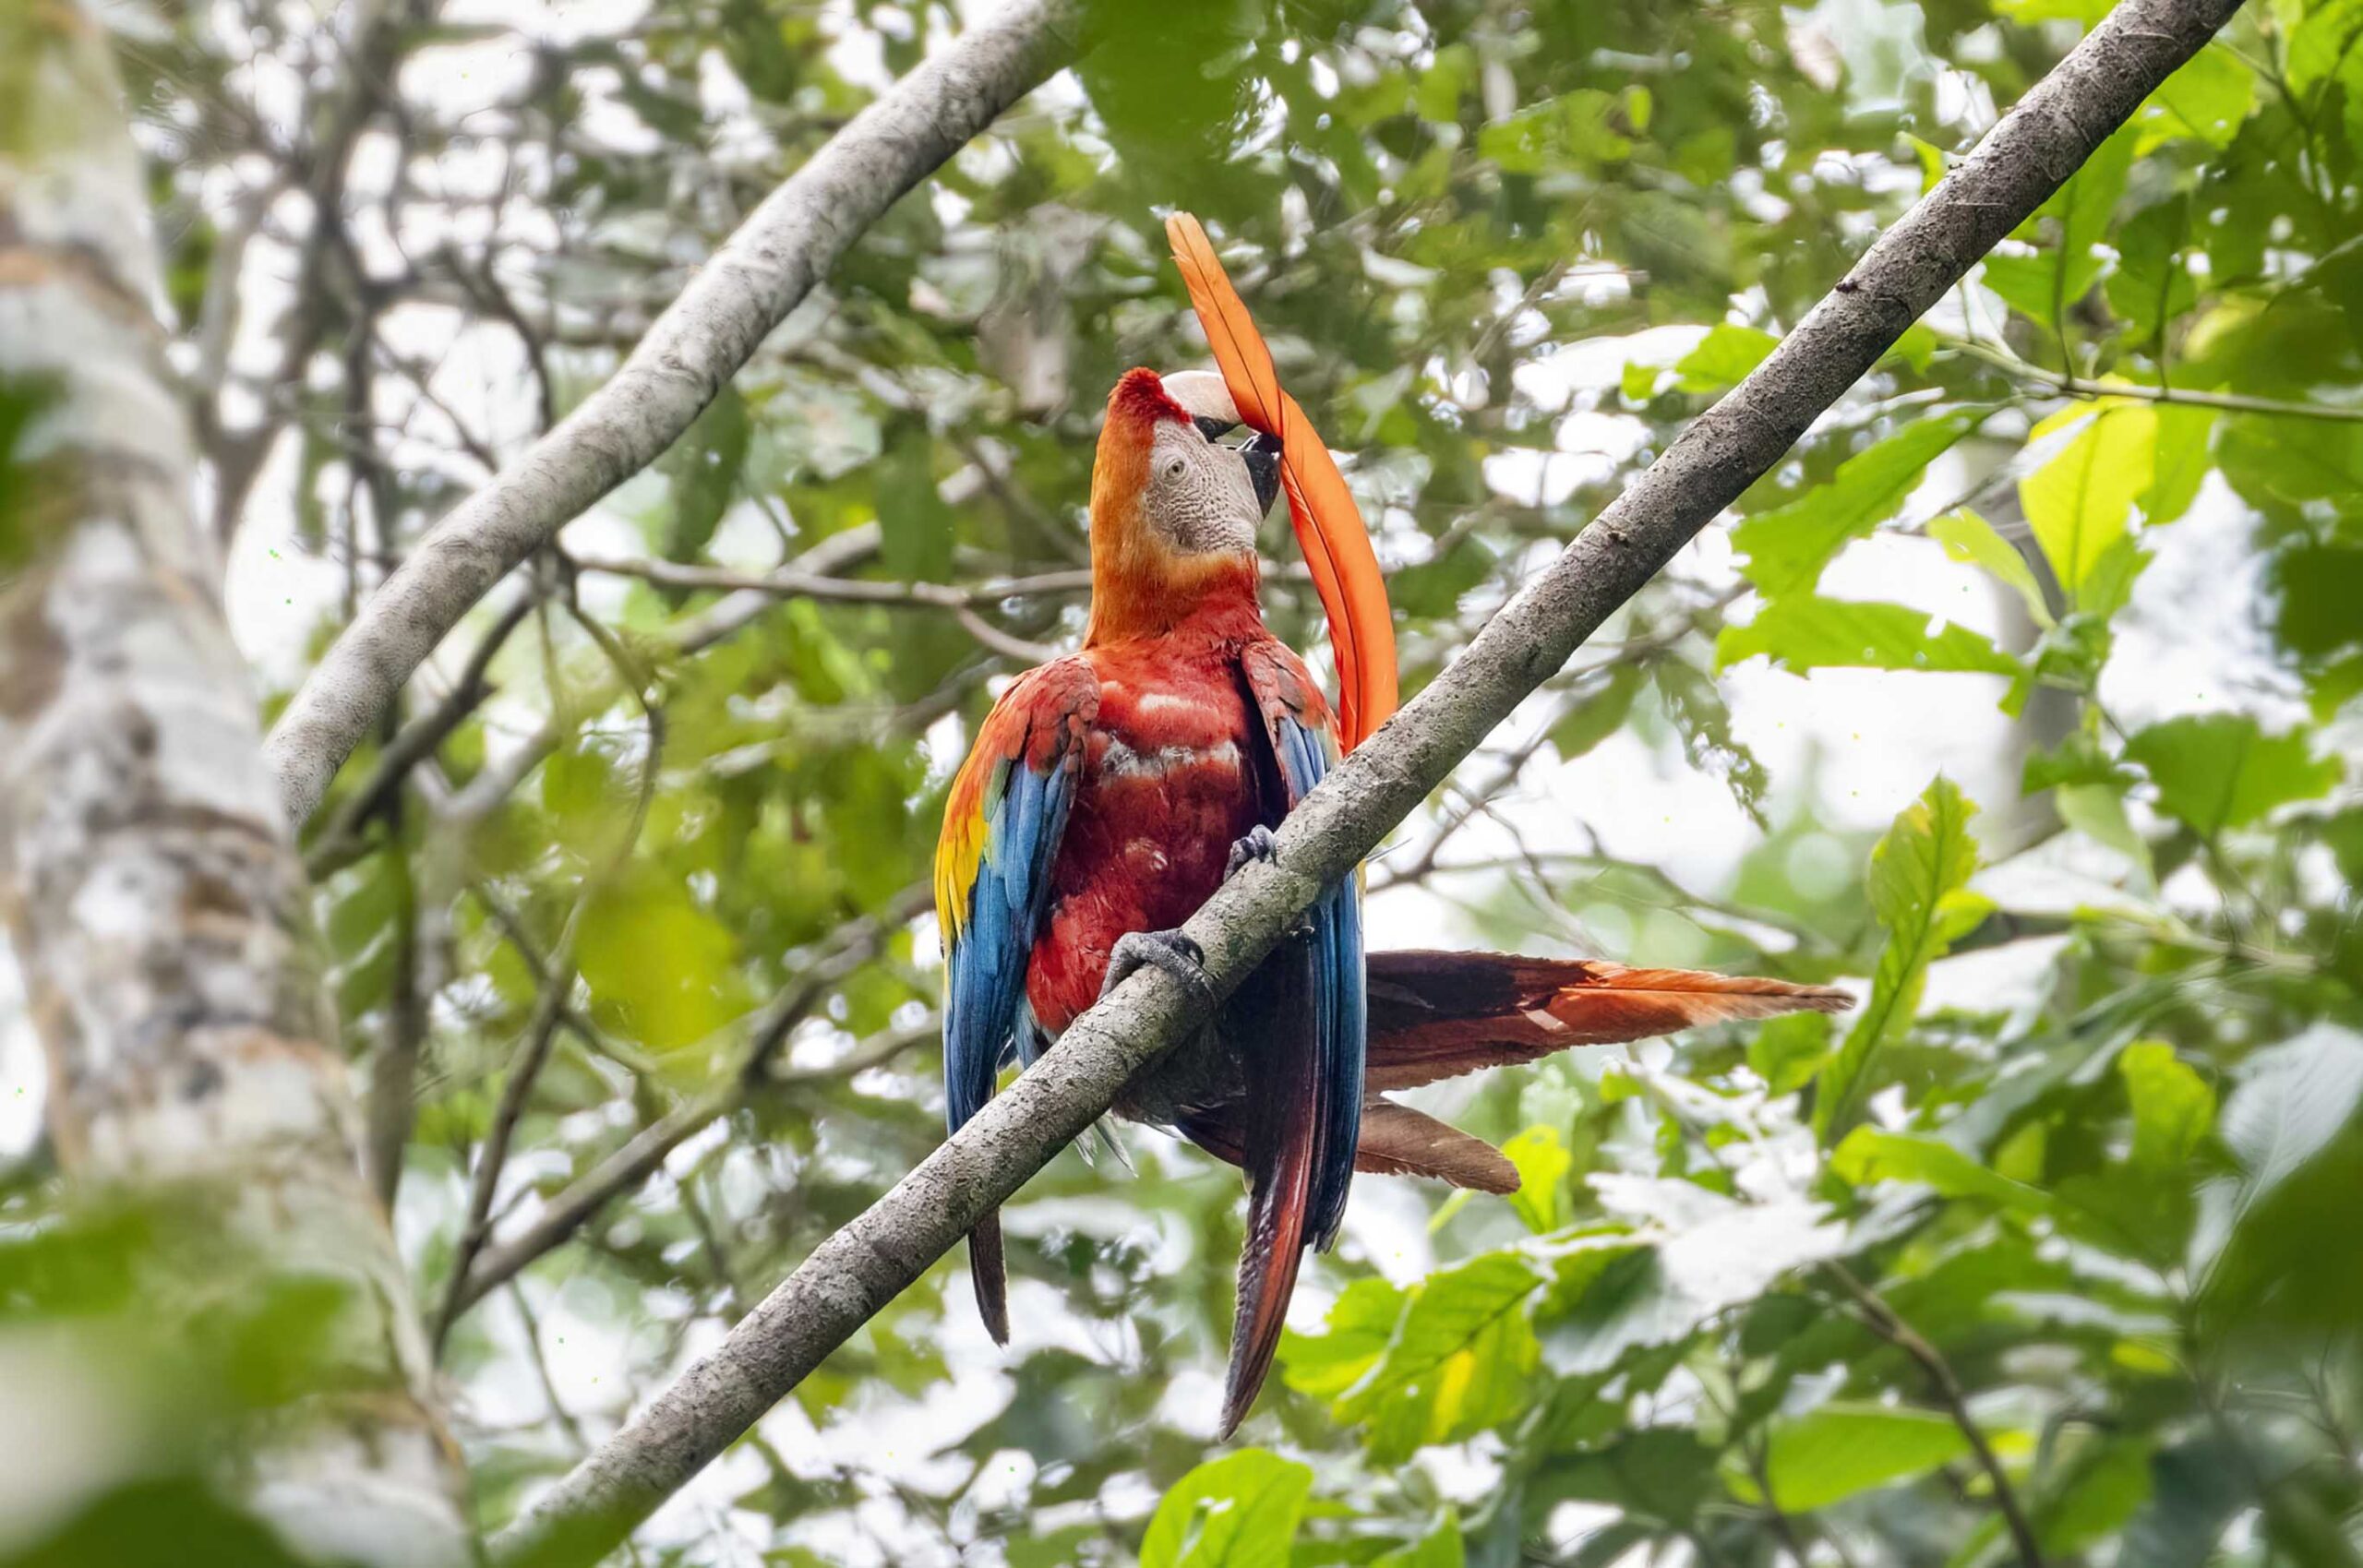 Photographed in The Amazon Rainforest, Ecuador by Tamara Lackey